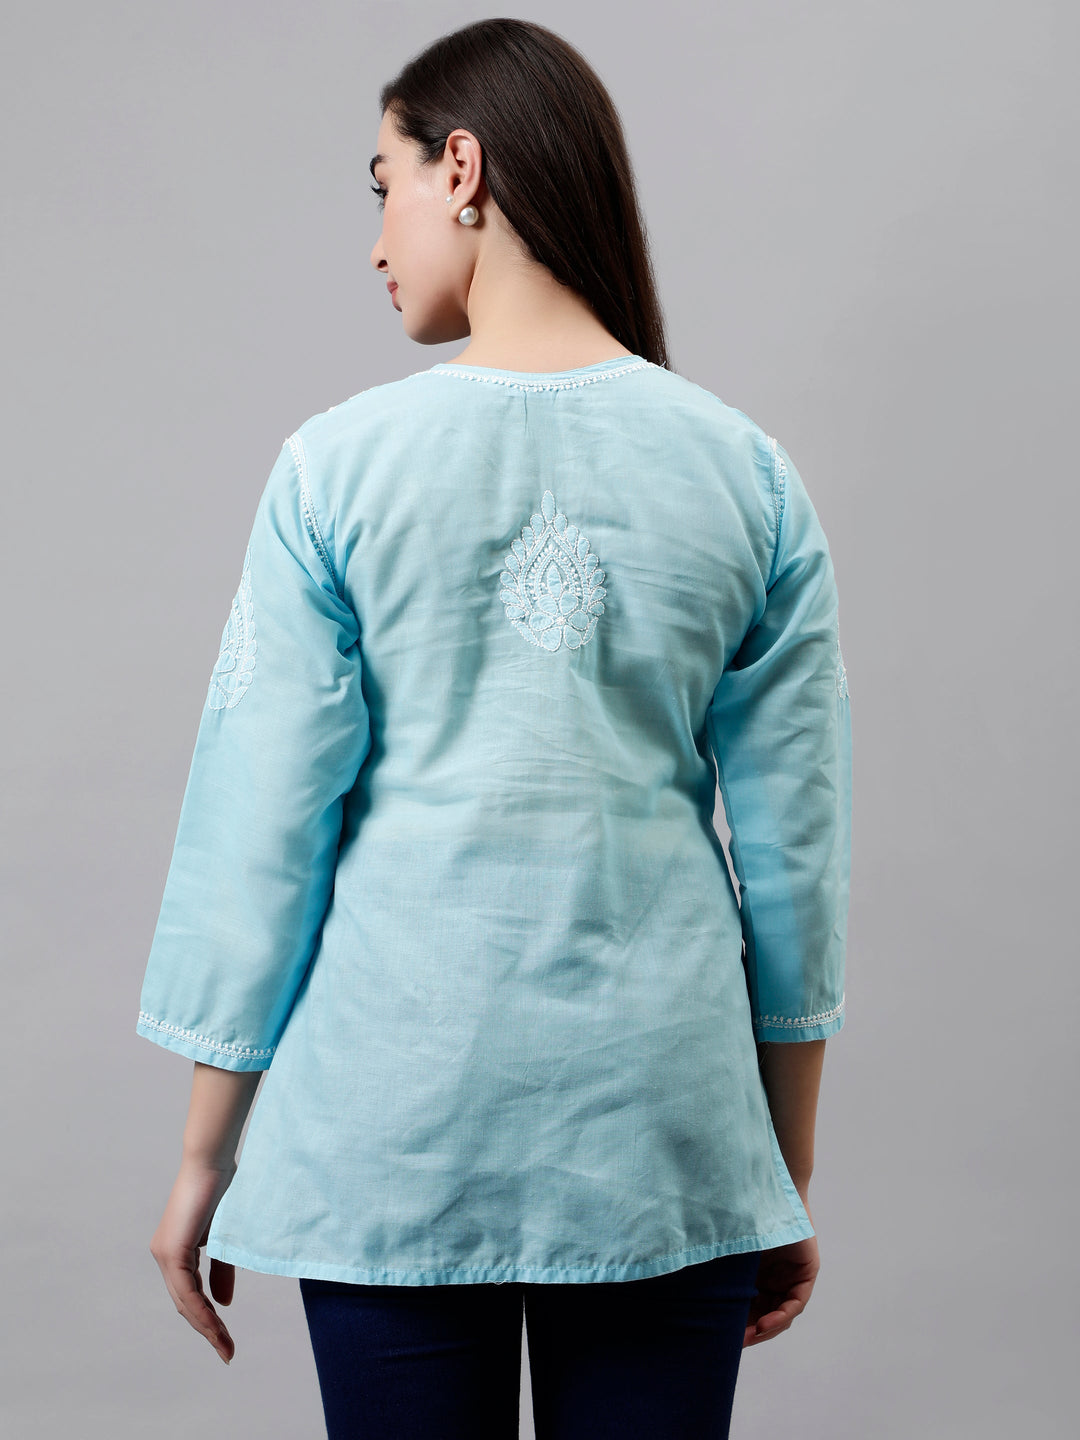 Blue Terivoil Cotton Embroidered Chikankari Short Tunic